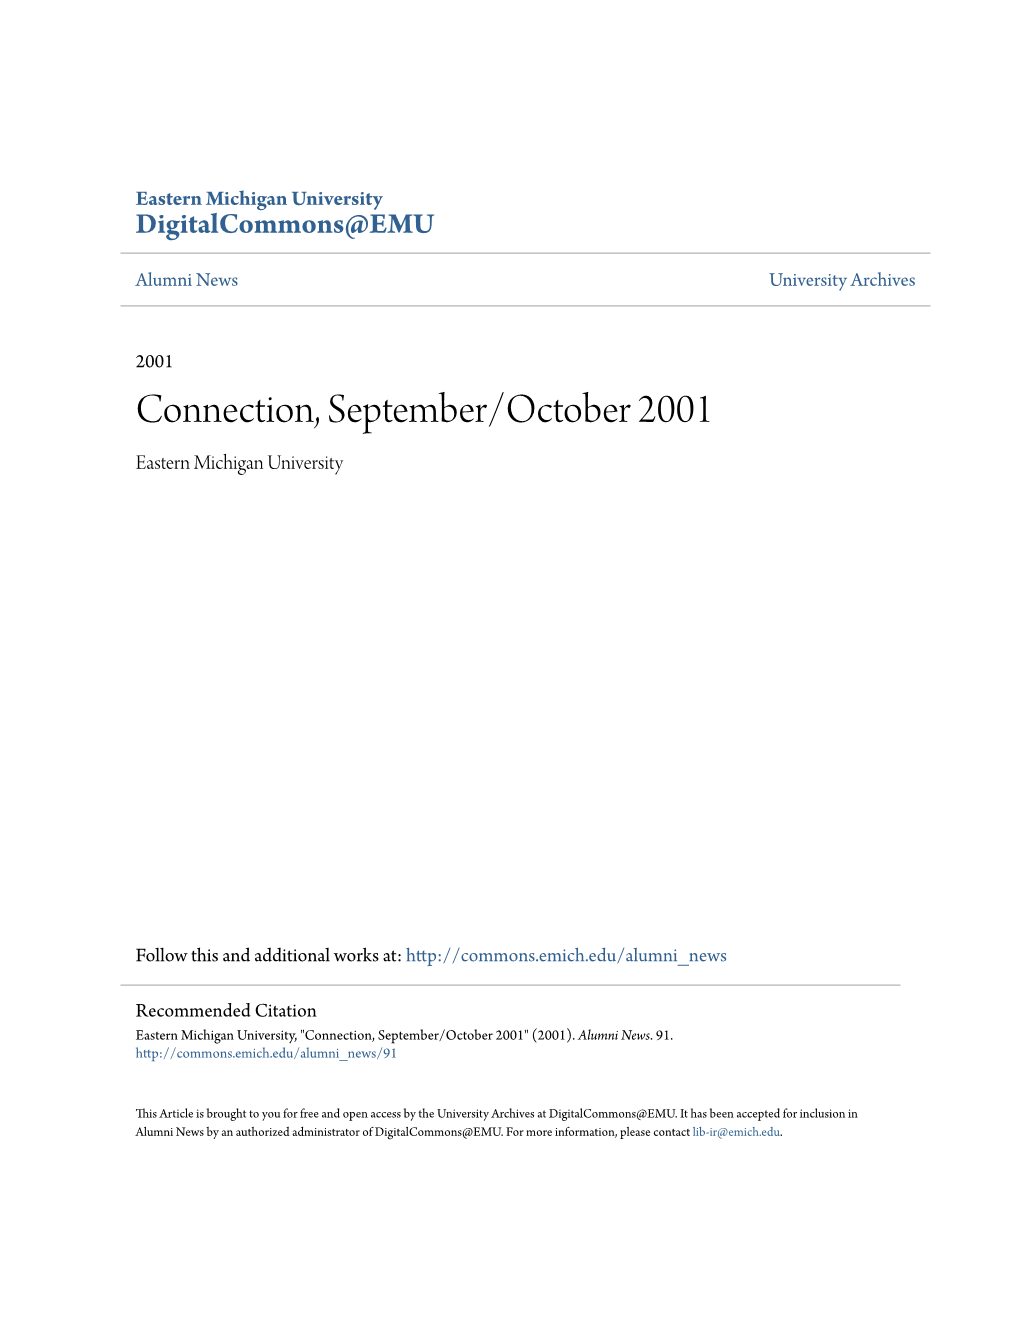 Connection, September/October 2001 Eastern Michigan University